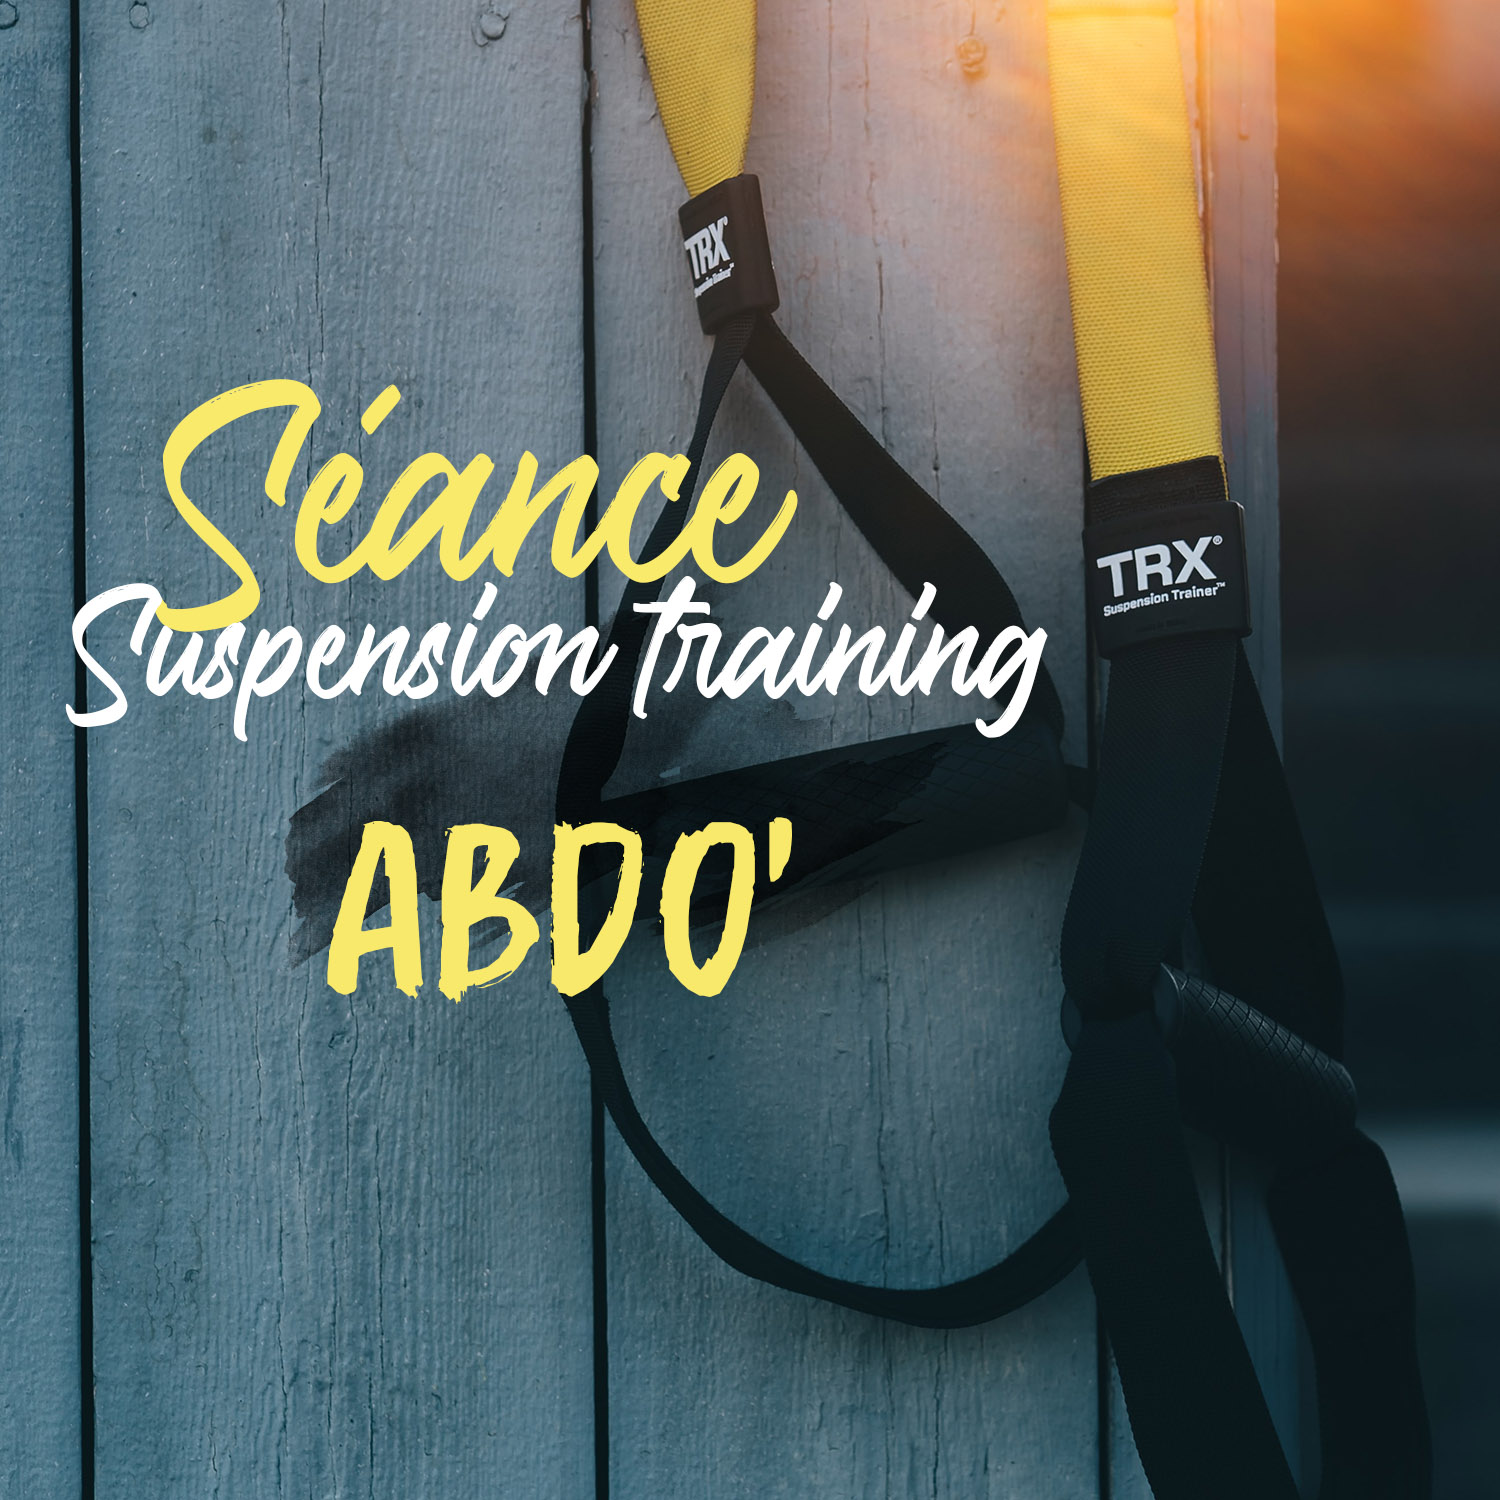 Séance suspension training (TRX) –  spécial abdo